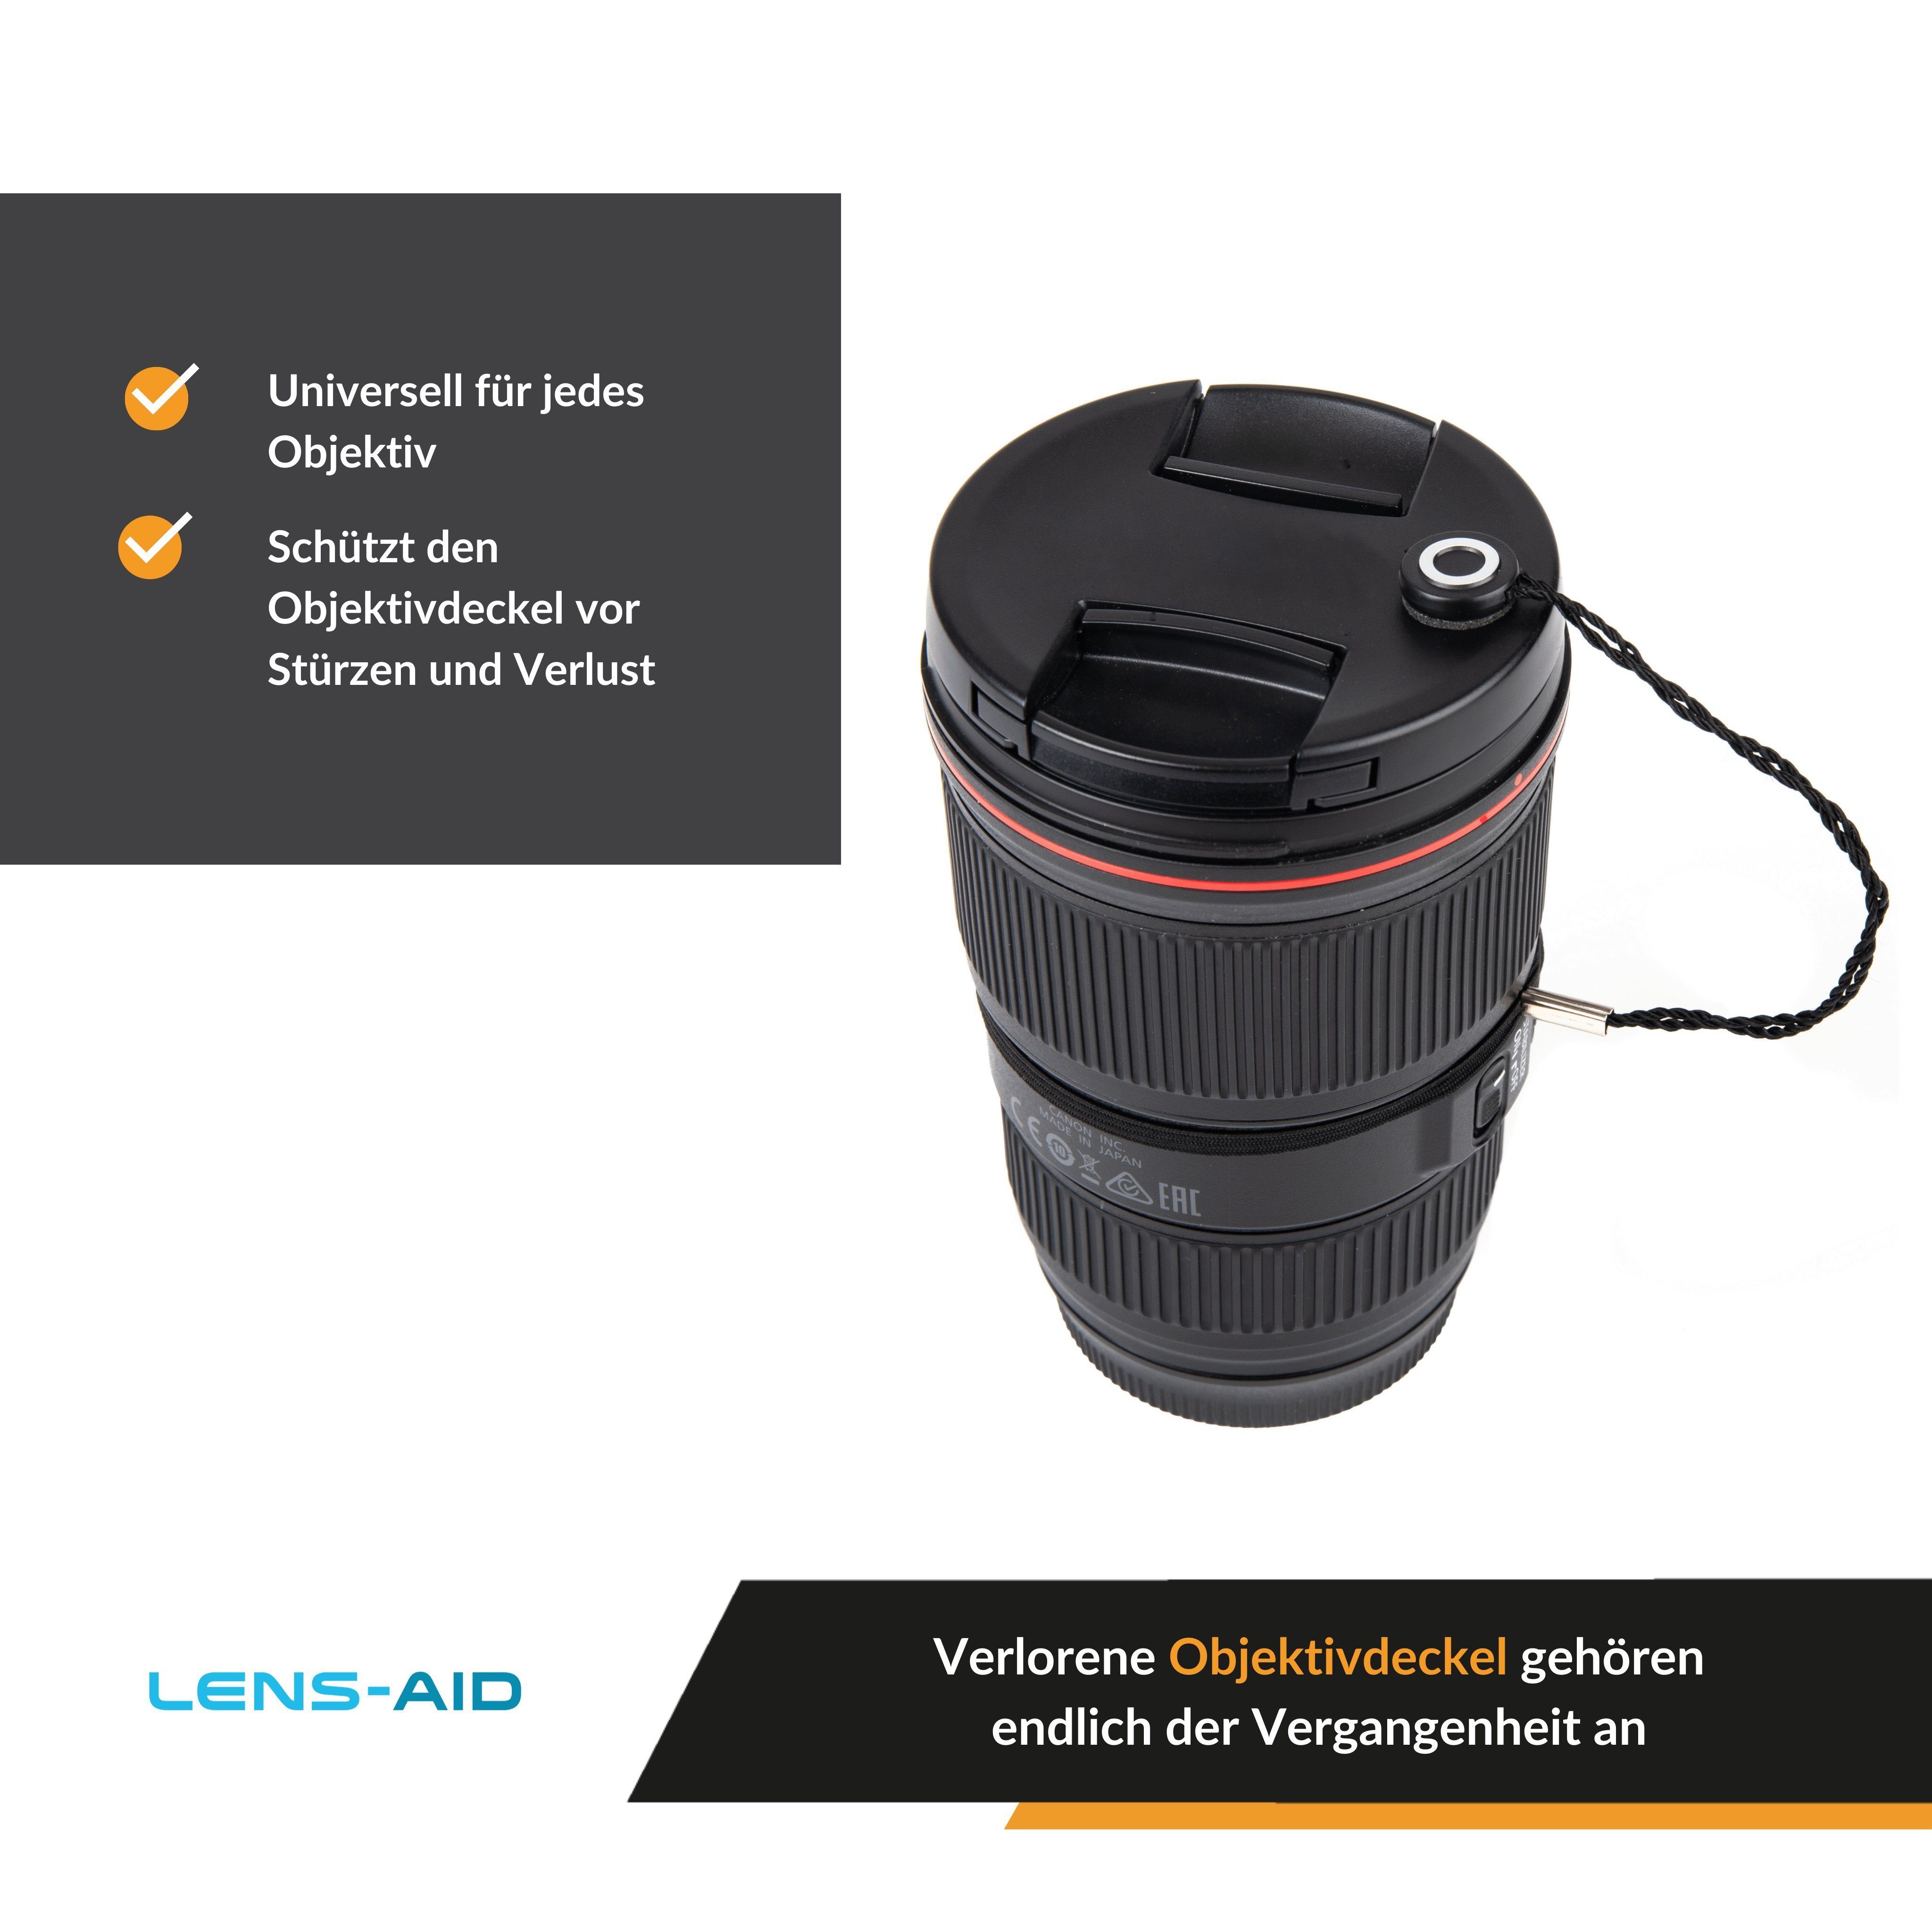 Lens-Aid (3 Objektivdeckelhalter, Kamerazubehör-Set tlg)